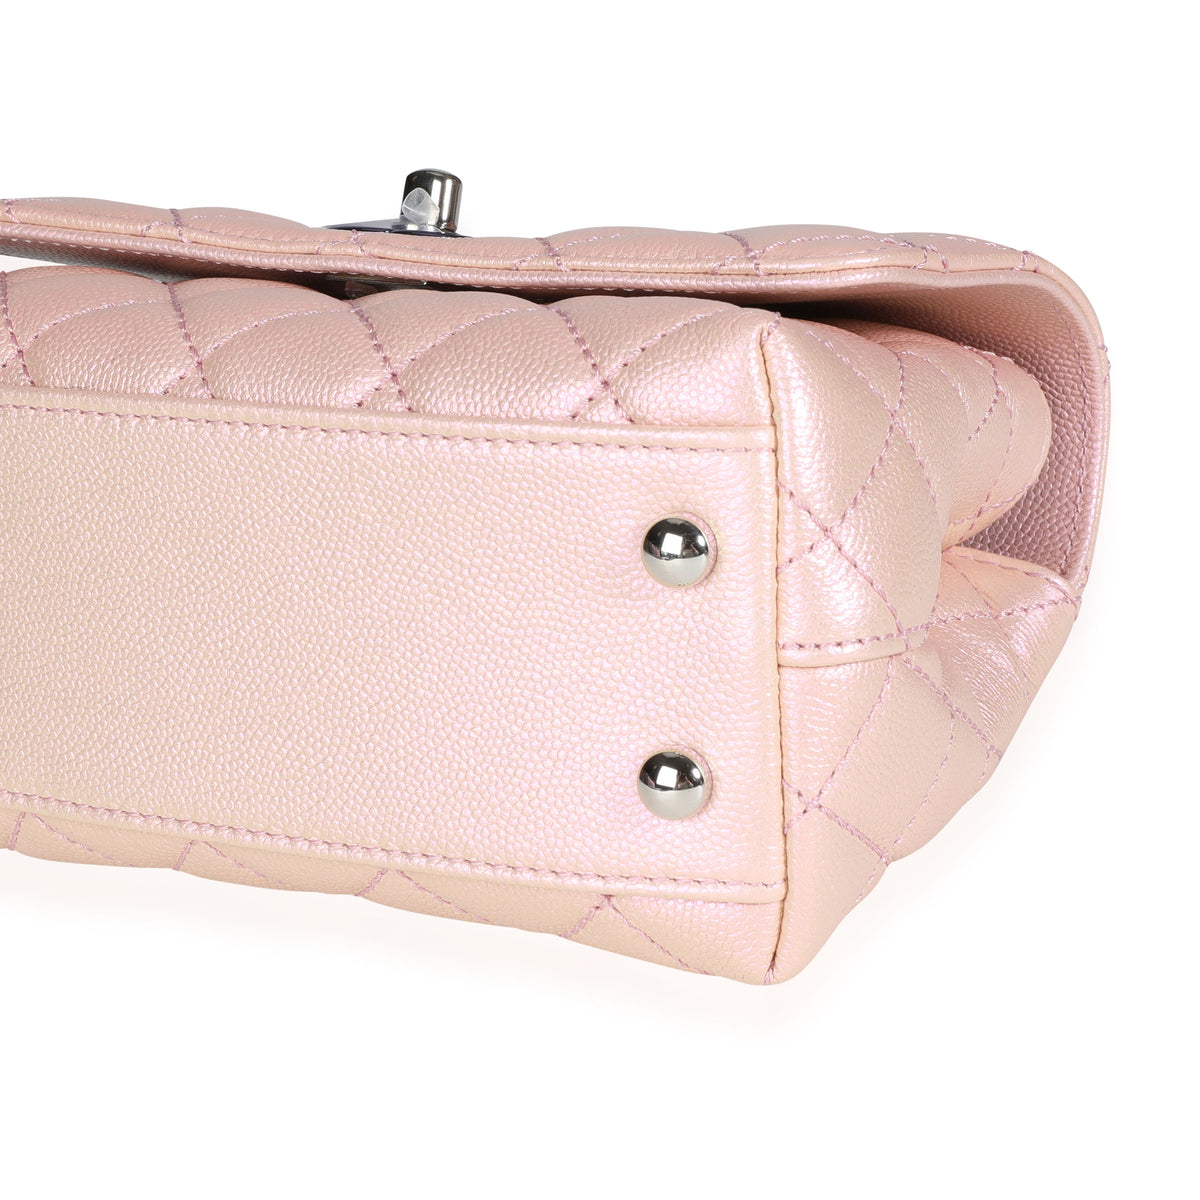 Replica Chanel Mini Coco Flap Bag with Top Handle in Iridescent Graine